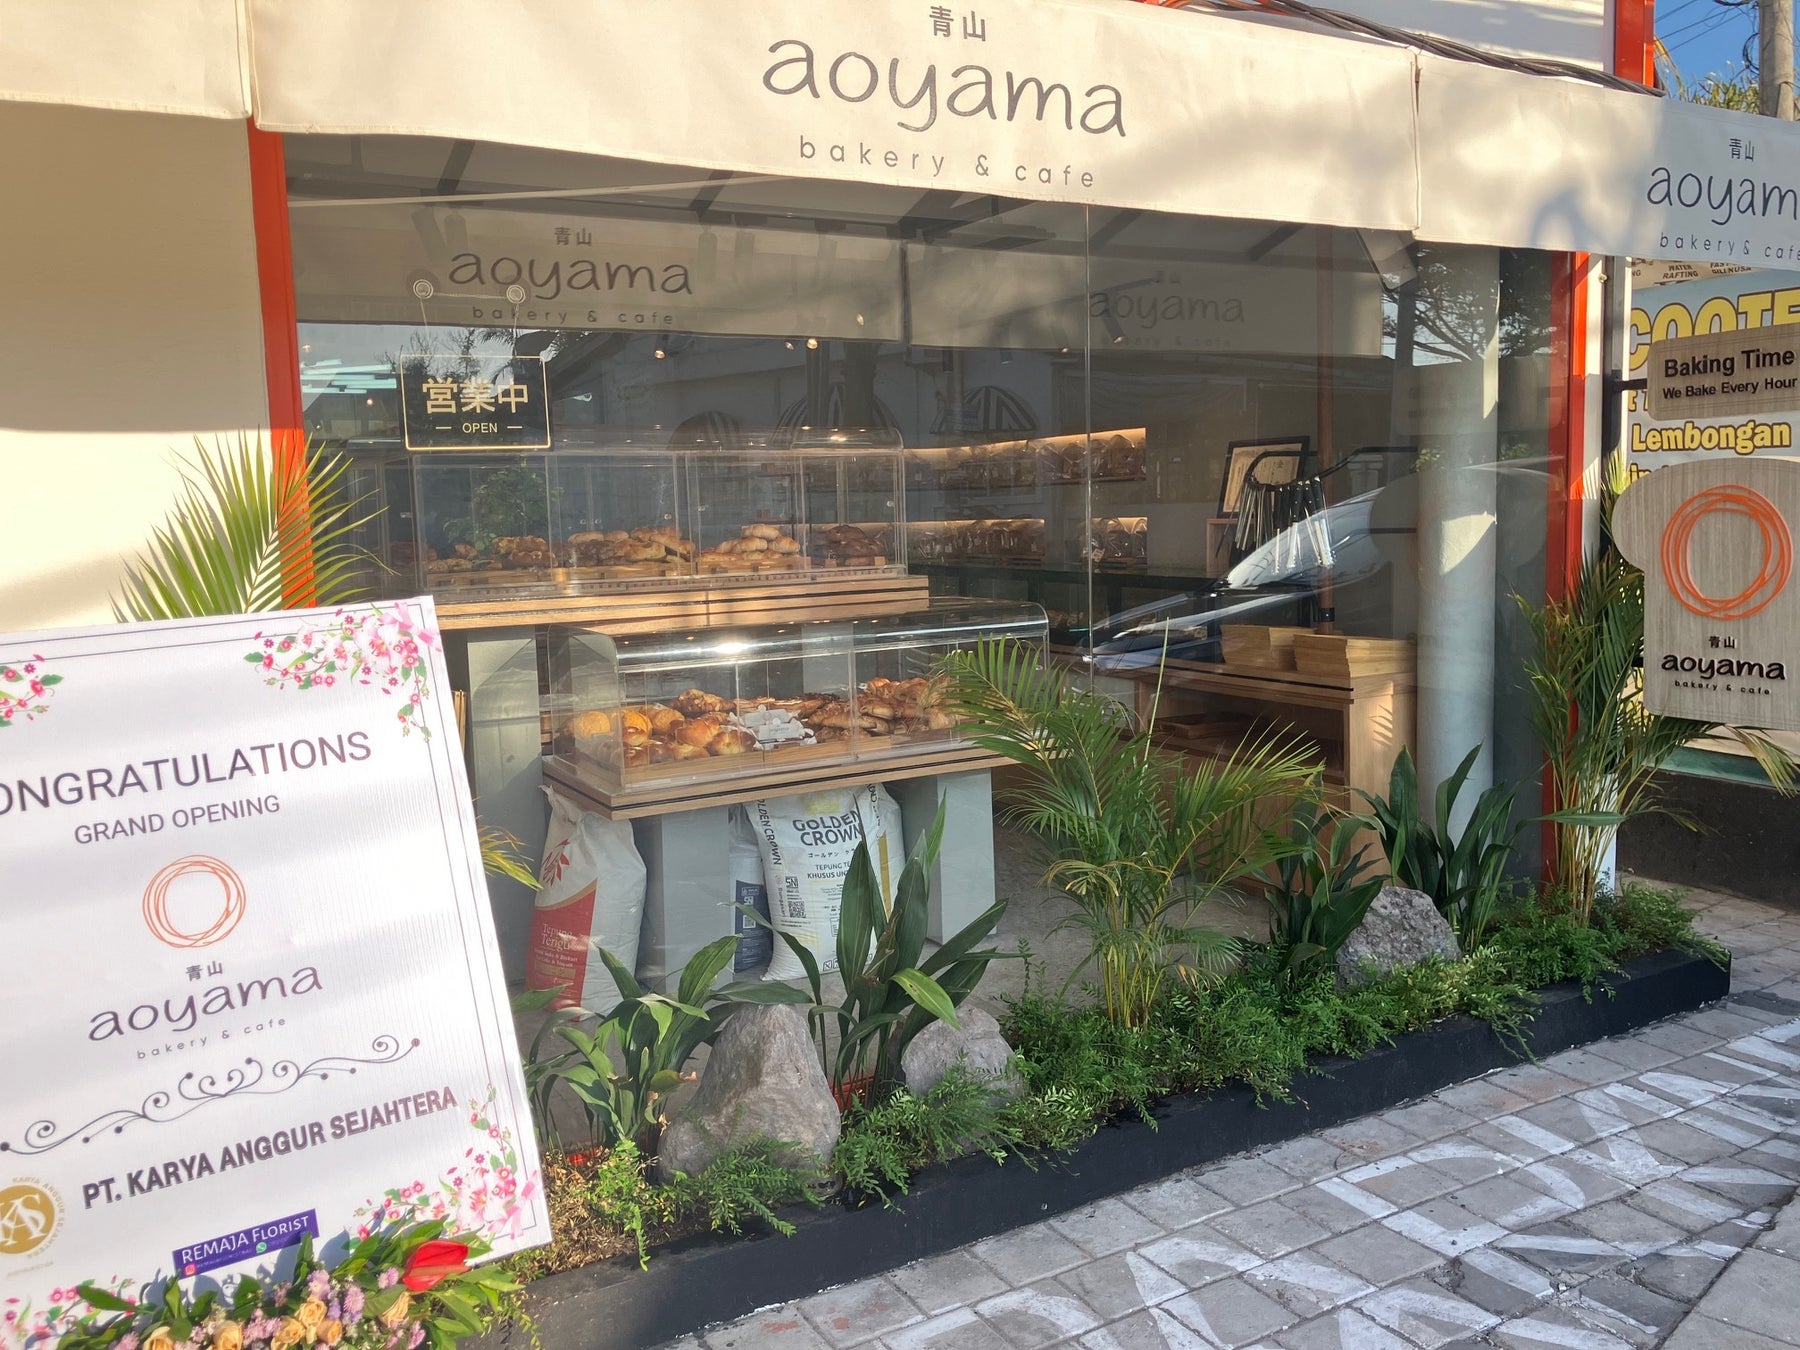 Bakerys Kitchen『ohana』インドネシア バリに姉妹店「Aoyama Japanese Bakery & Cafe」５月１５日にオープン！